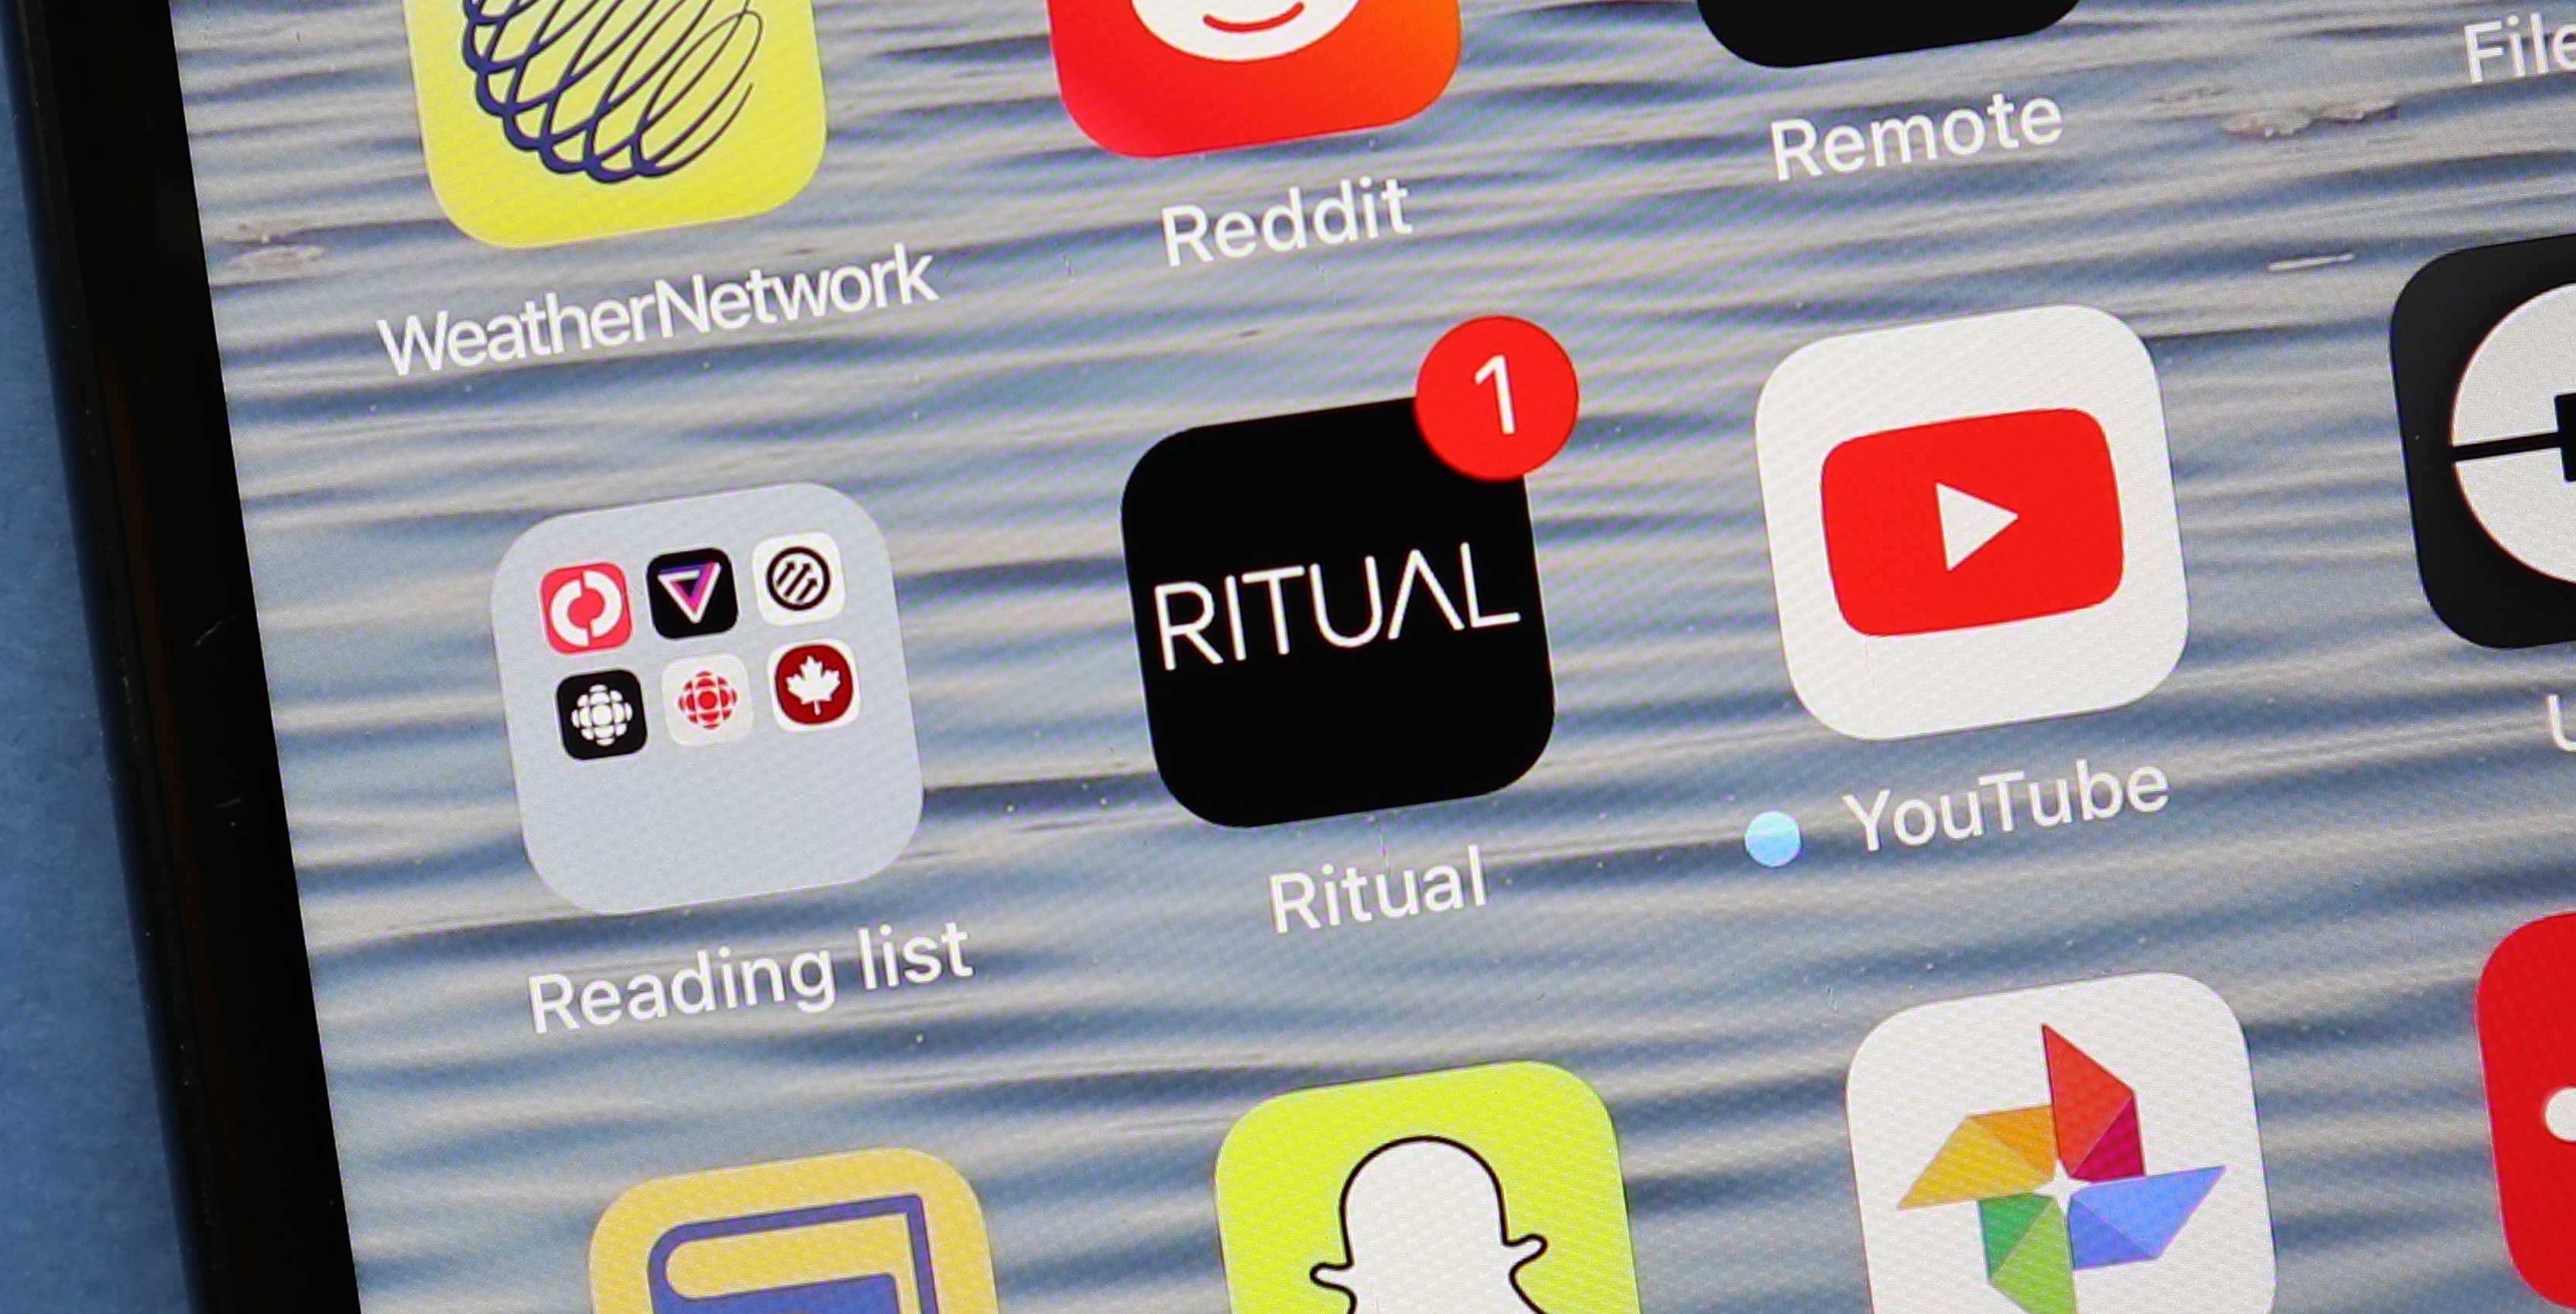 Ritual app